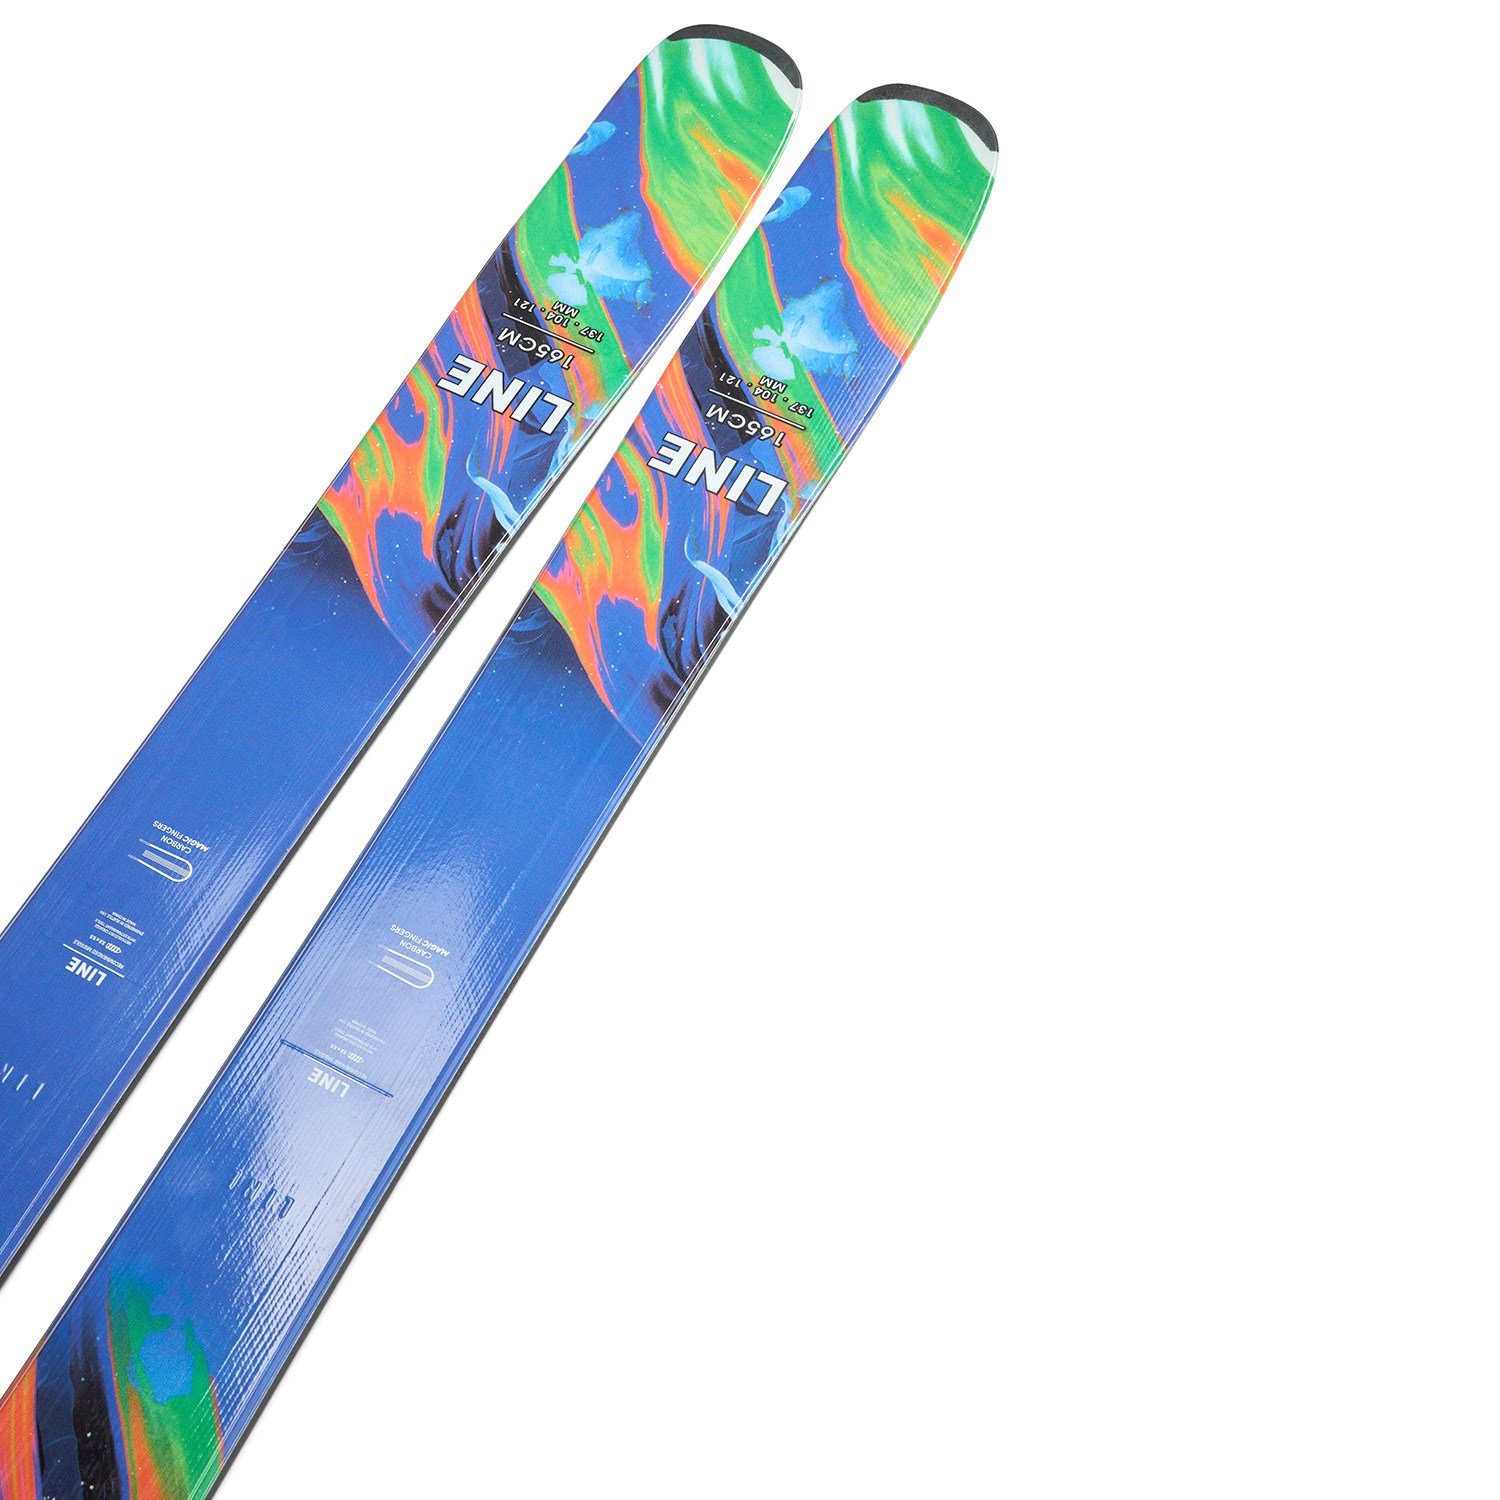 Line Skis Pandora 104 Skis - Women's 2024